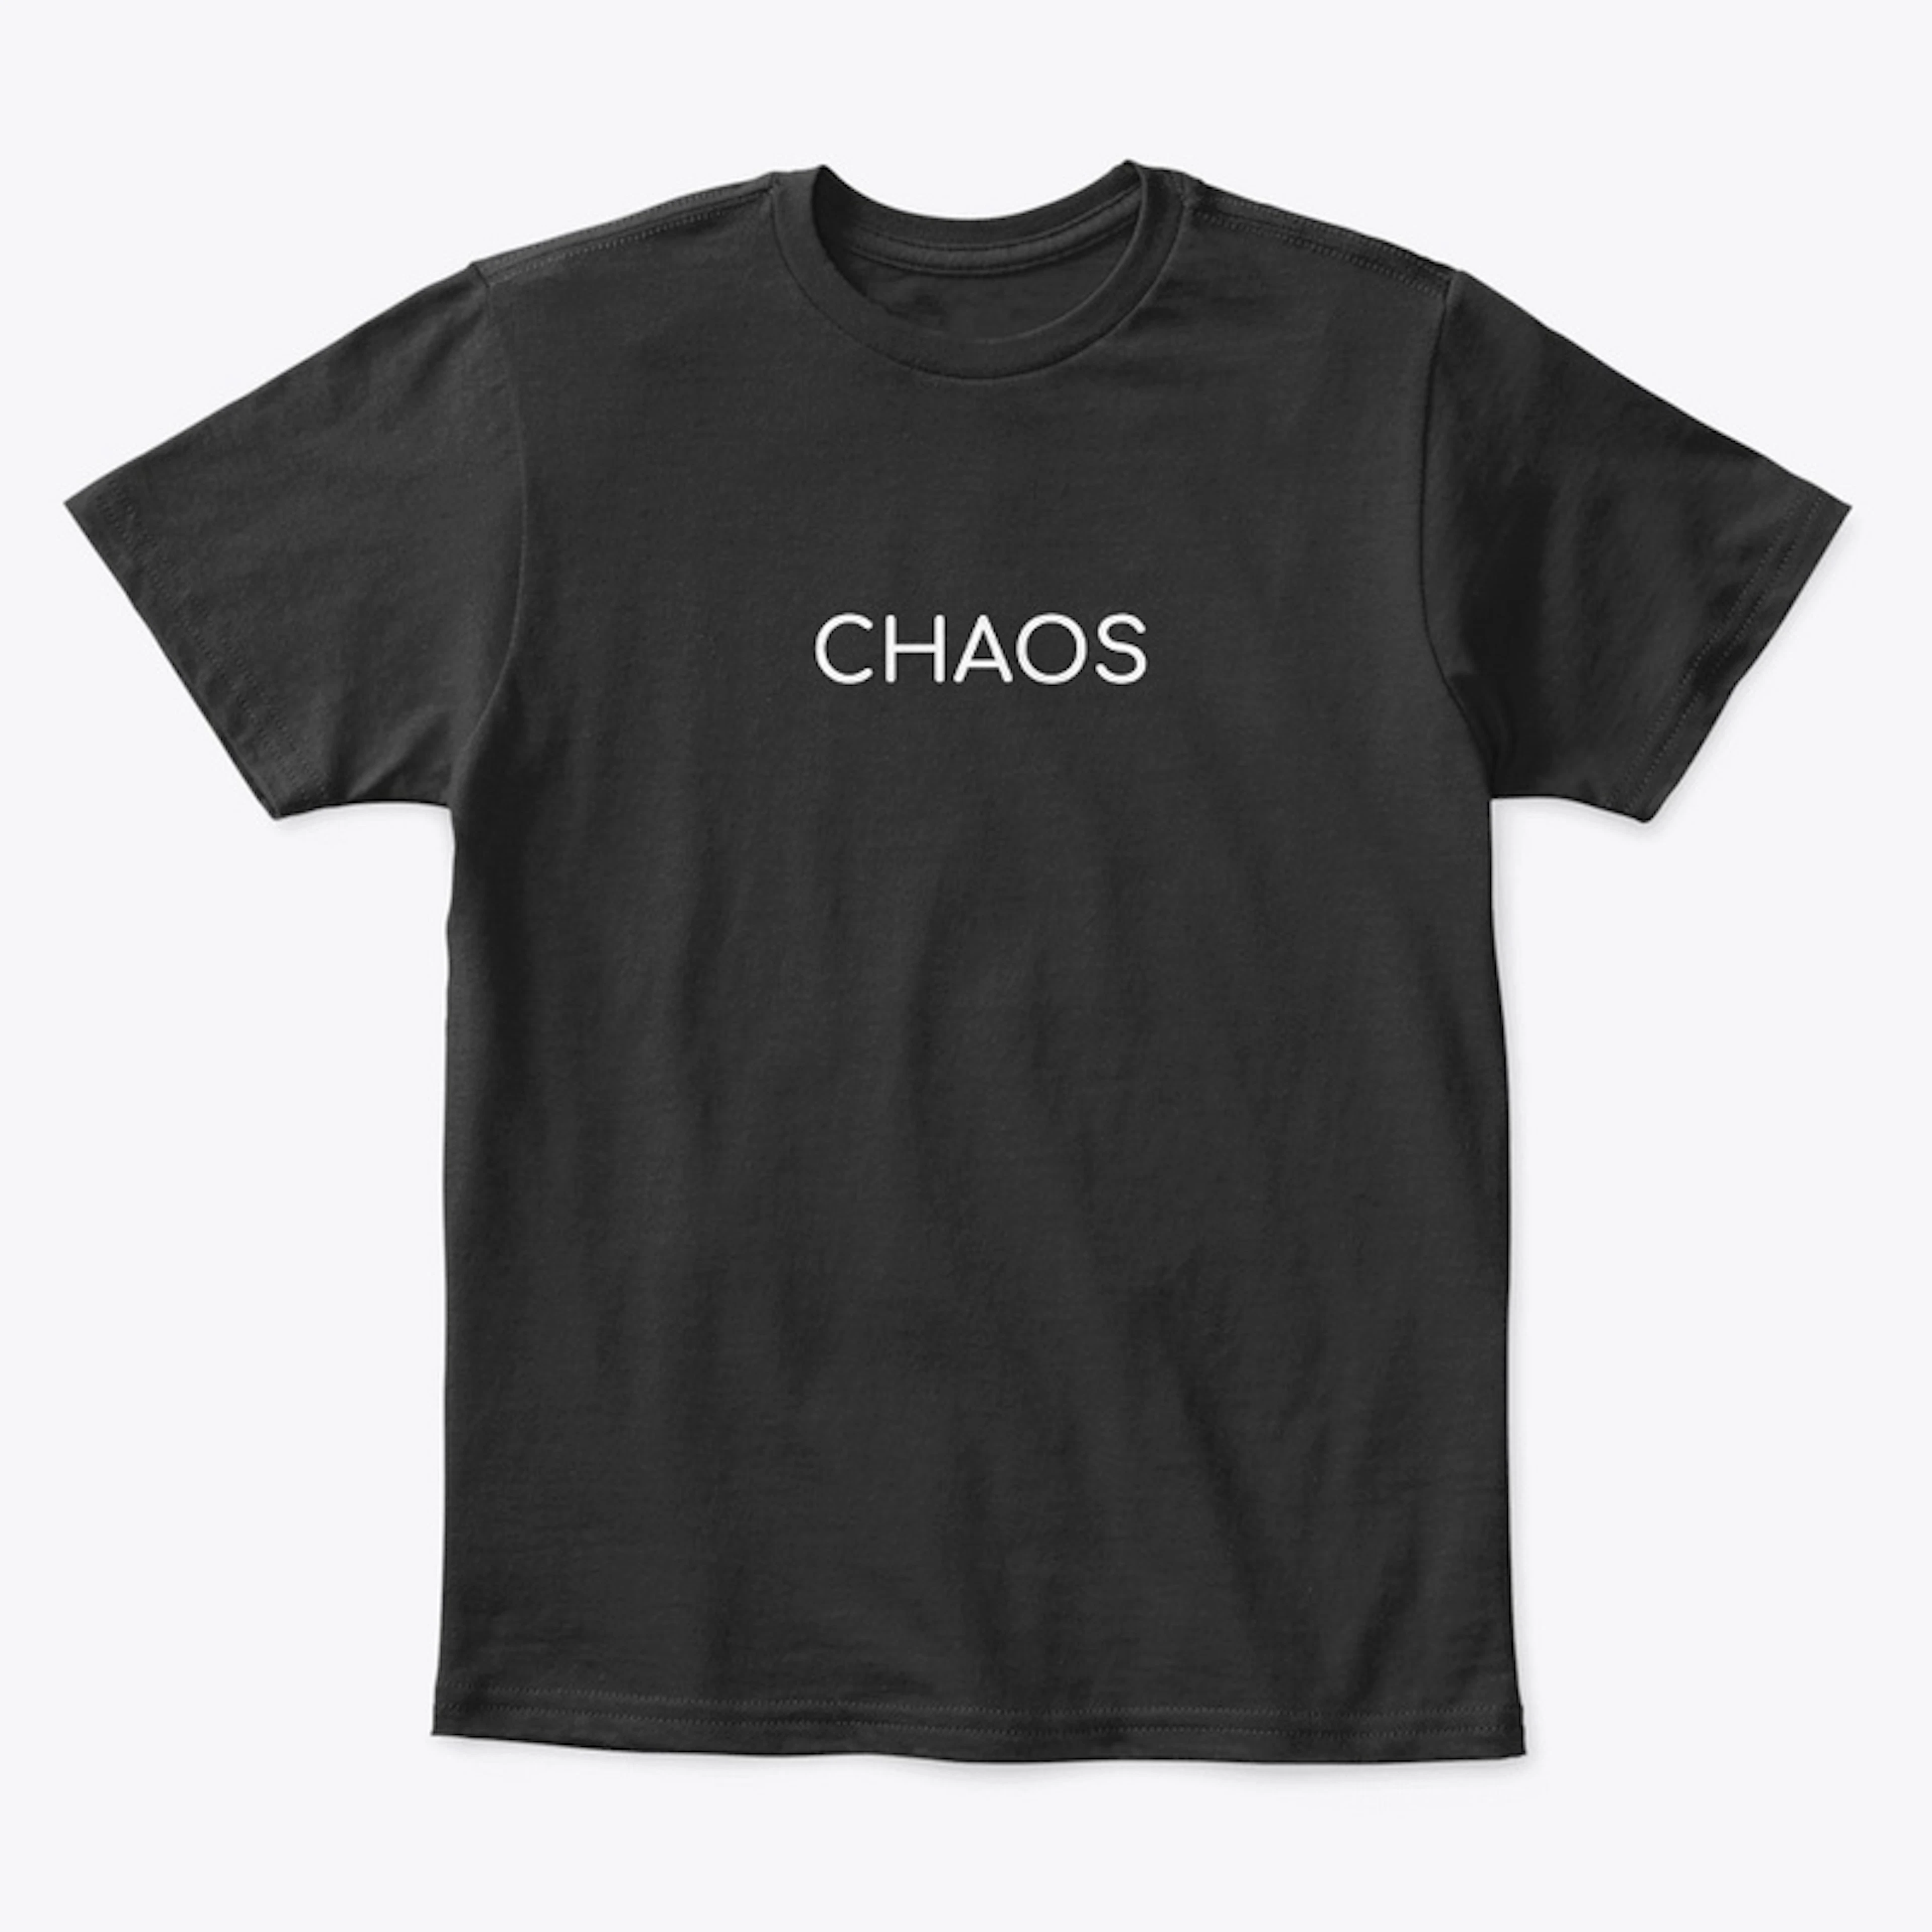 Chaos shirt for boy